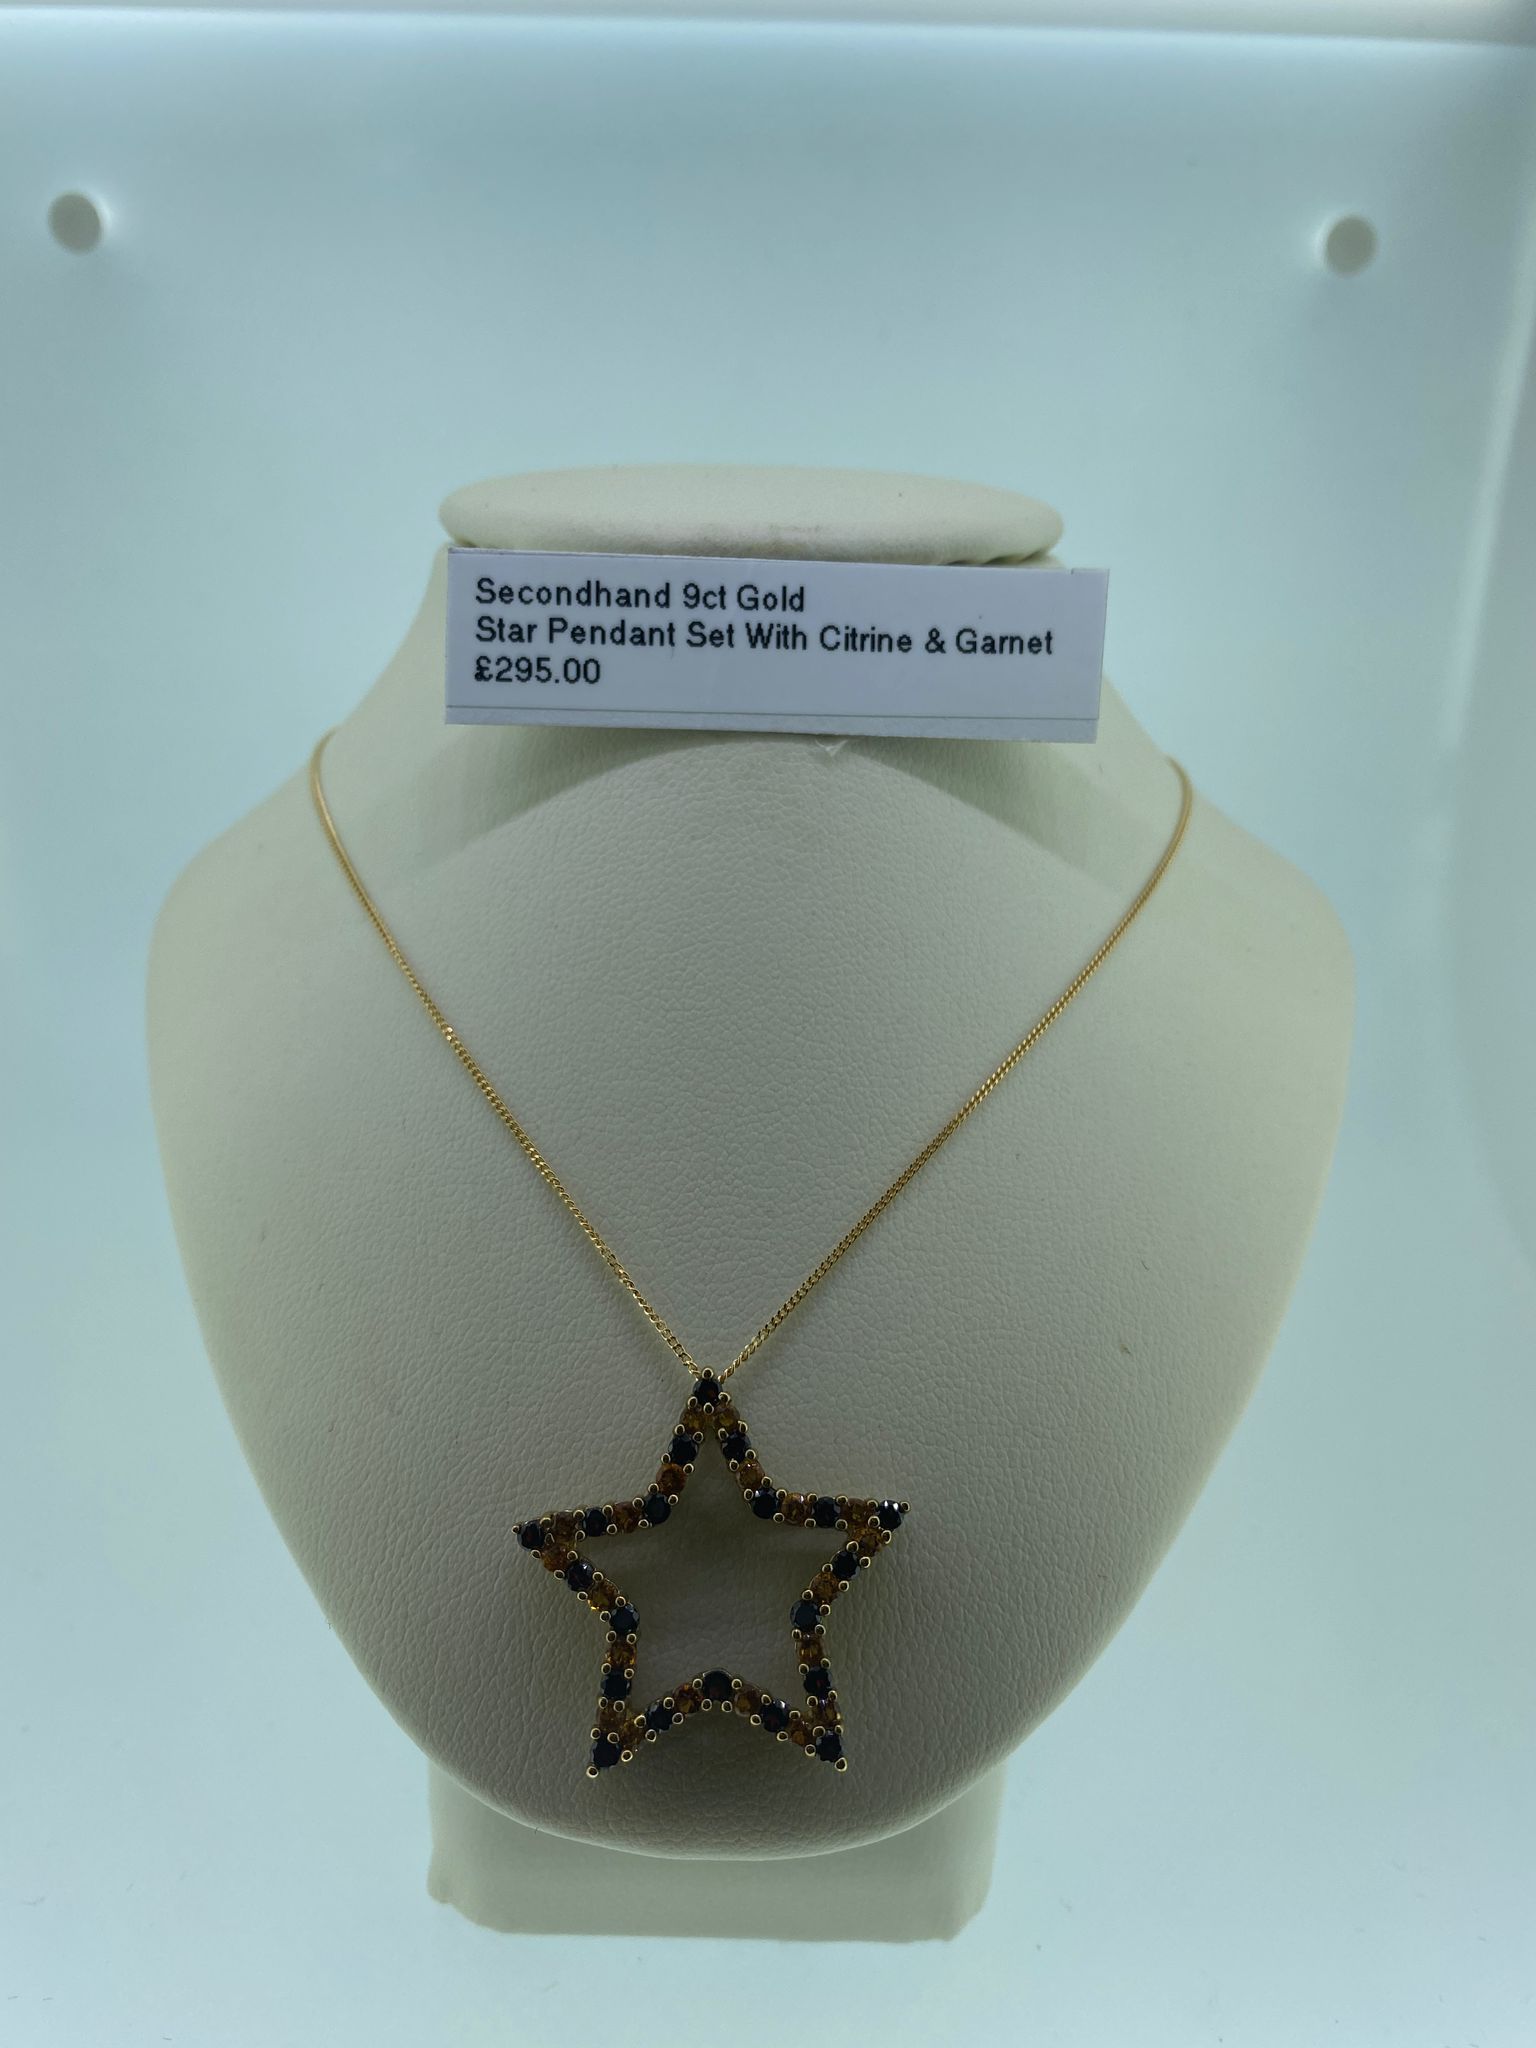 Secondhand 9ct Gold Star Pendant Set With Citrine & Garnet